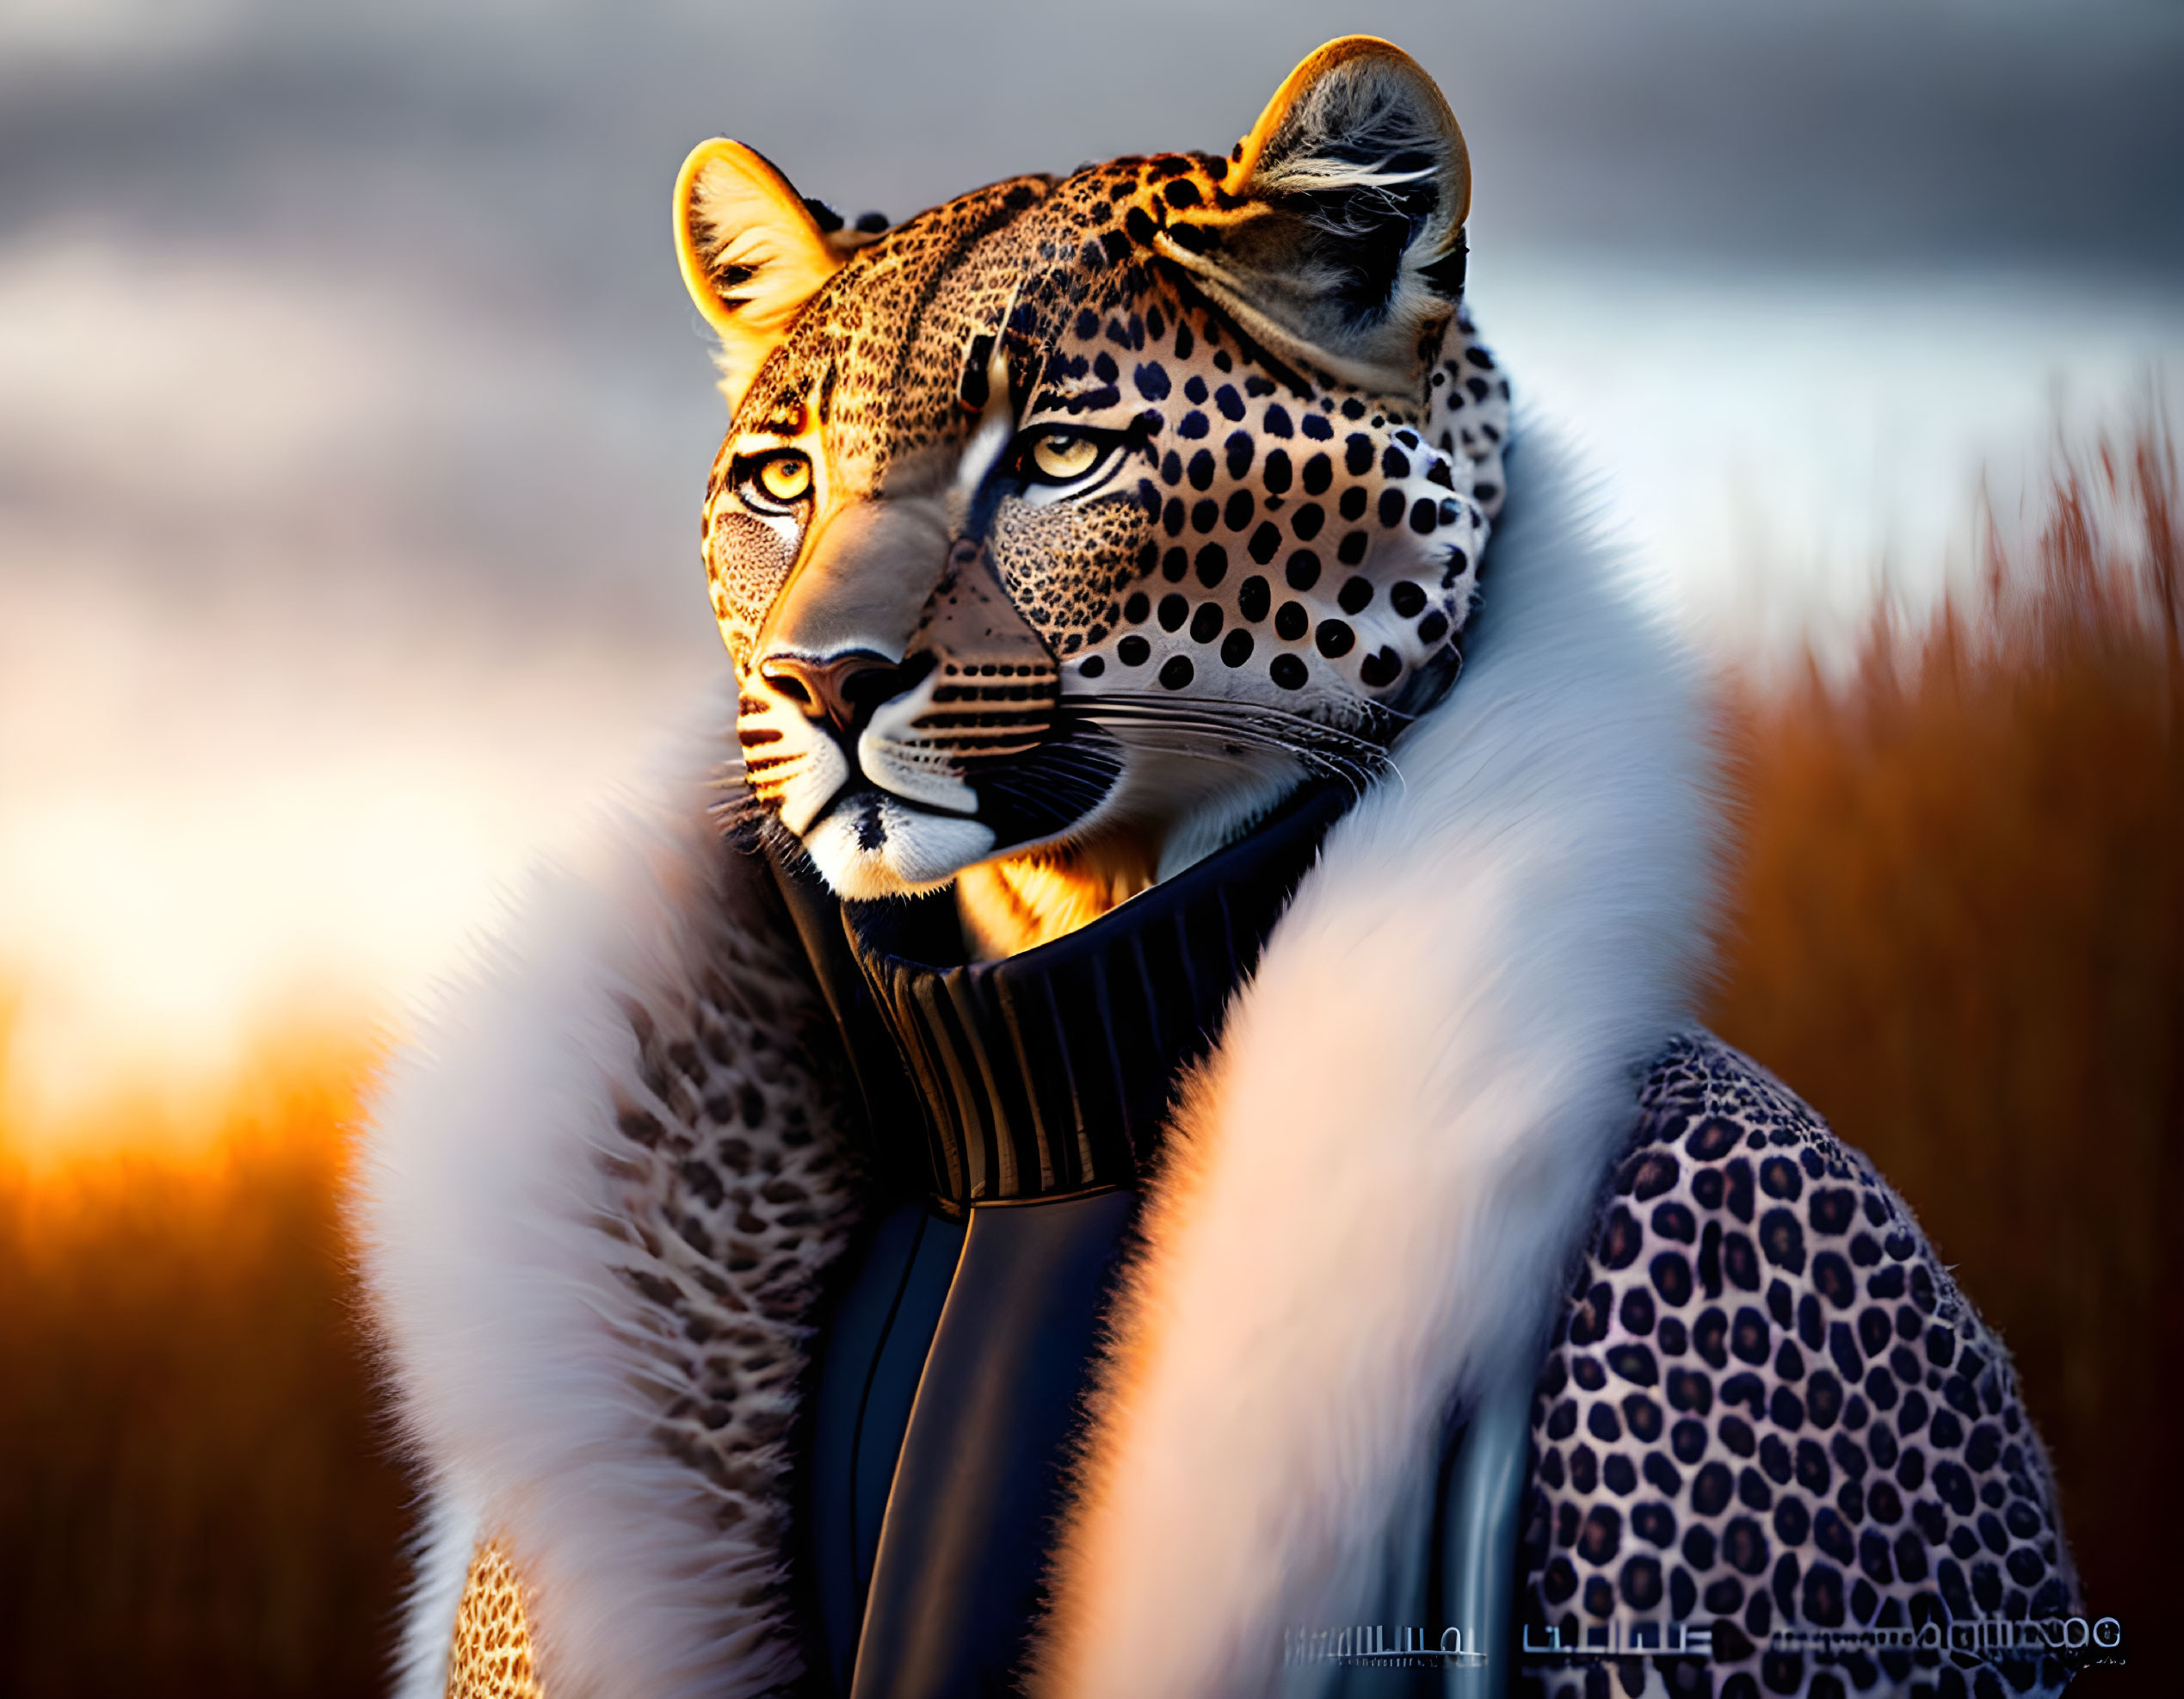  An ANTHROPOMORPHIC charming leopard